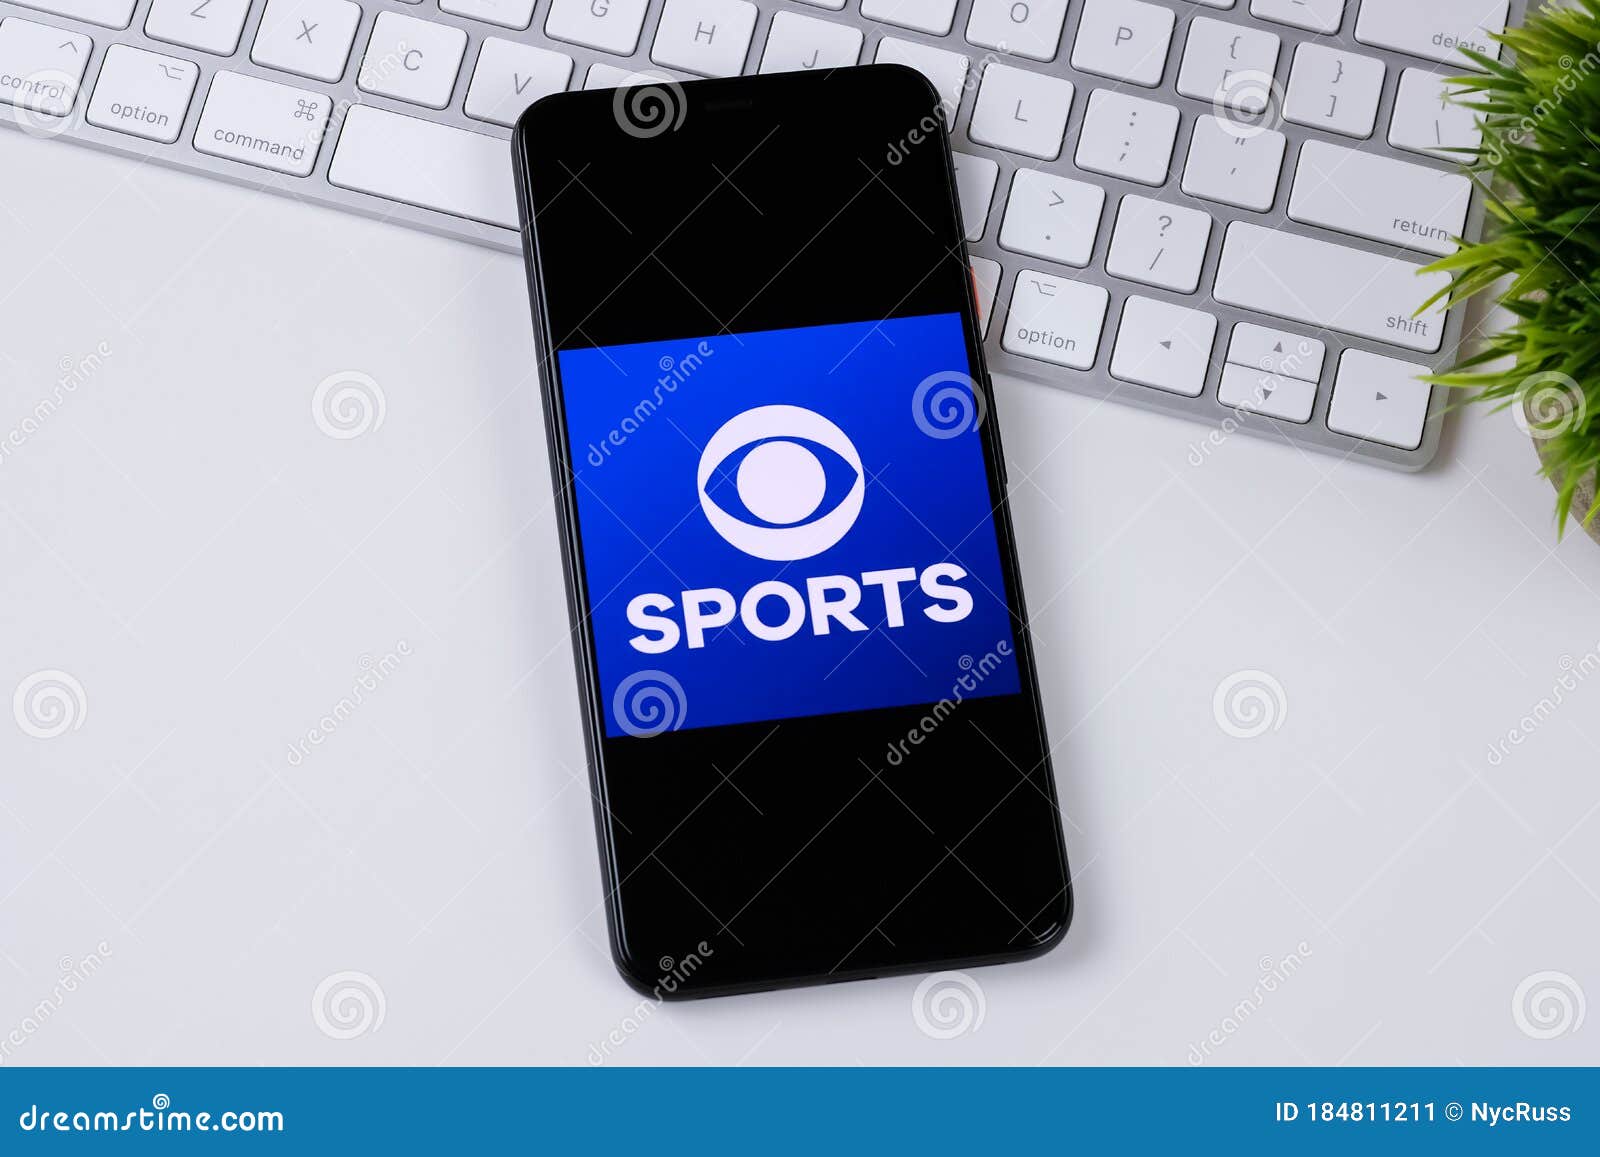 CBS Sports App Logo on a Smartphone Screen Editorial Photo